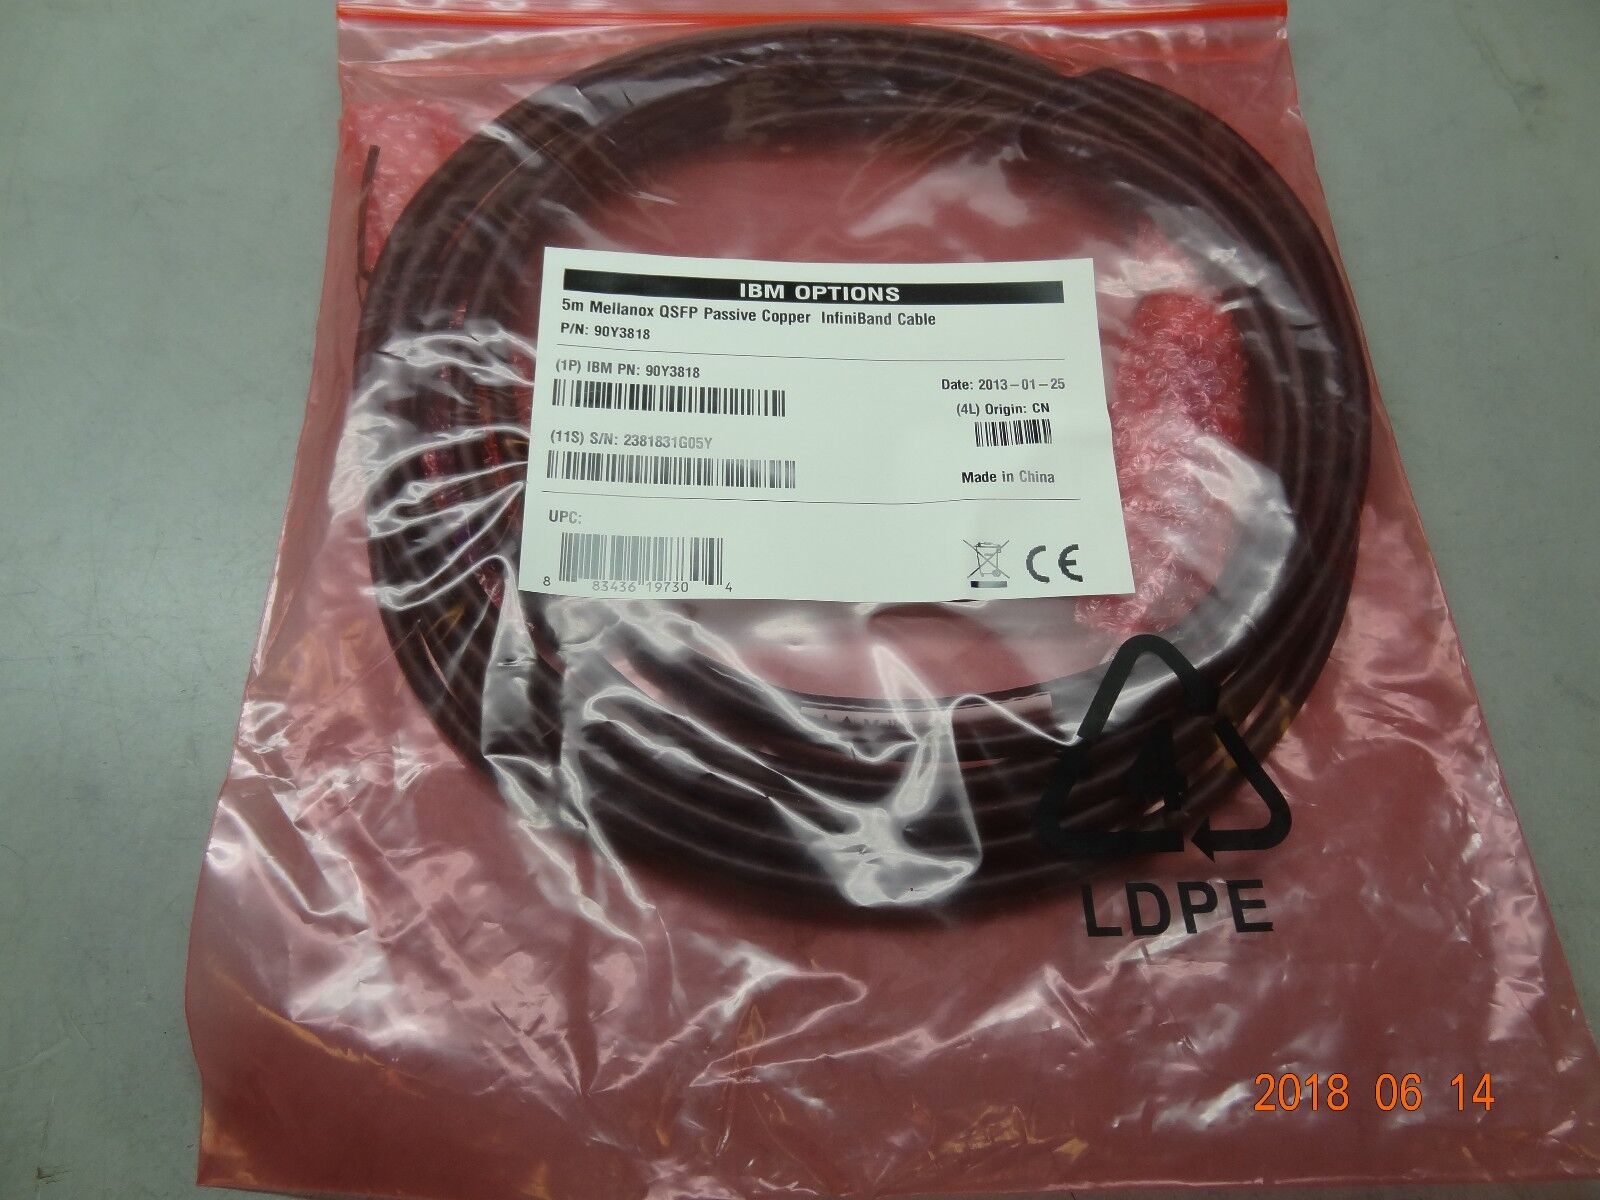 IBM 90Y3818 5m MELLANOX QSFP Passive Copper Infiniband Cable #T205